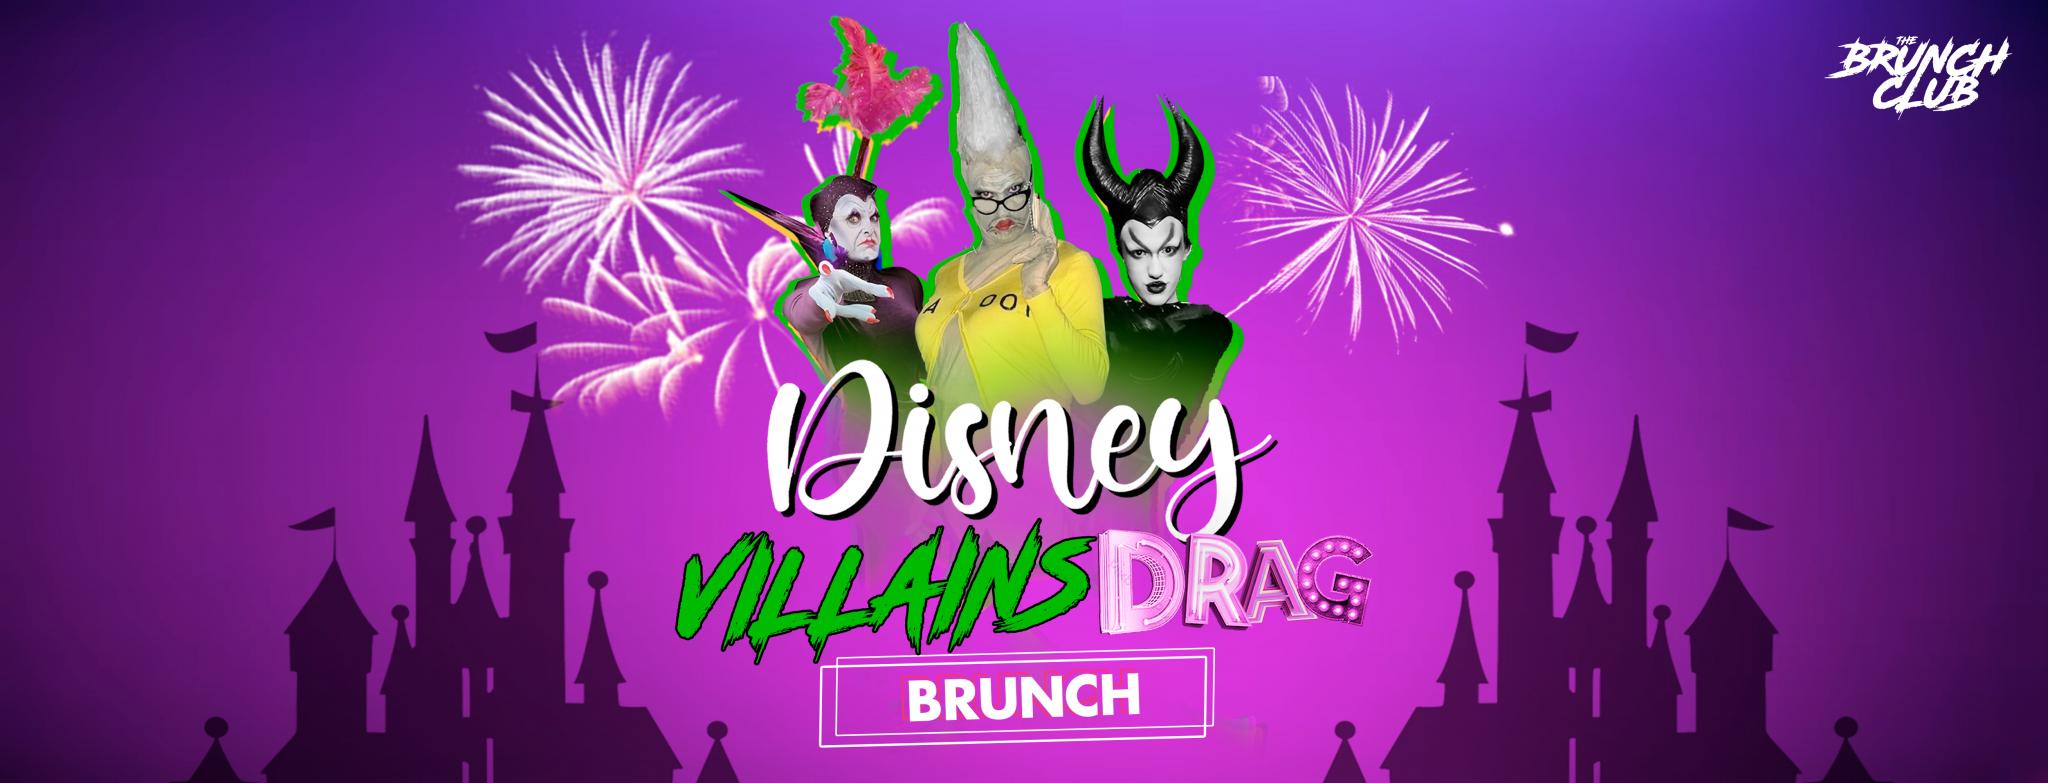 Disney Villains Drag Bottomless Brunch - London